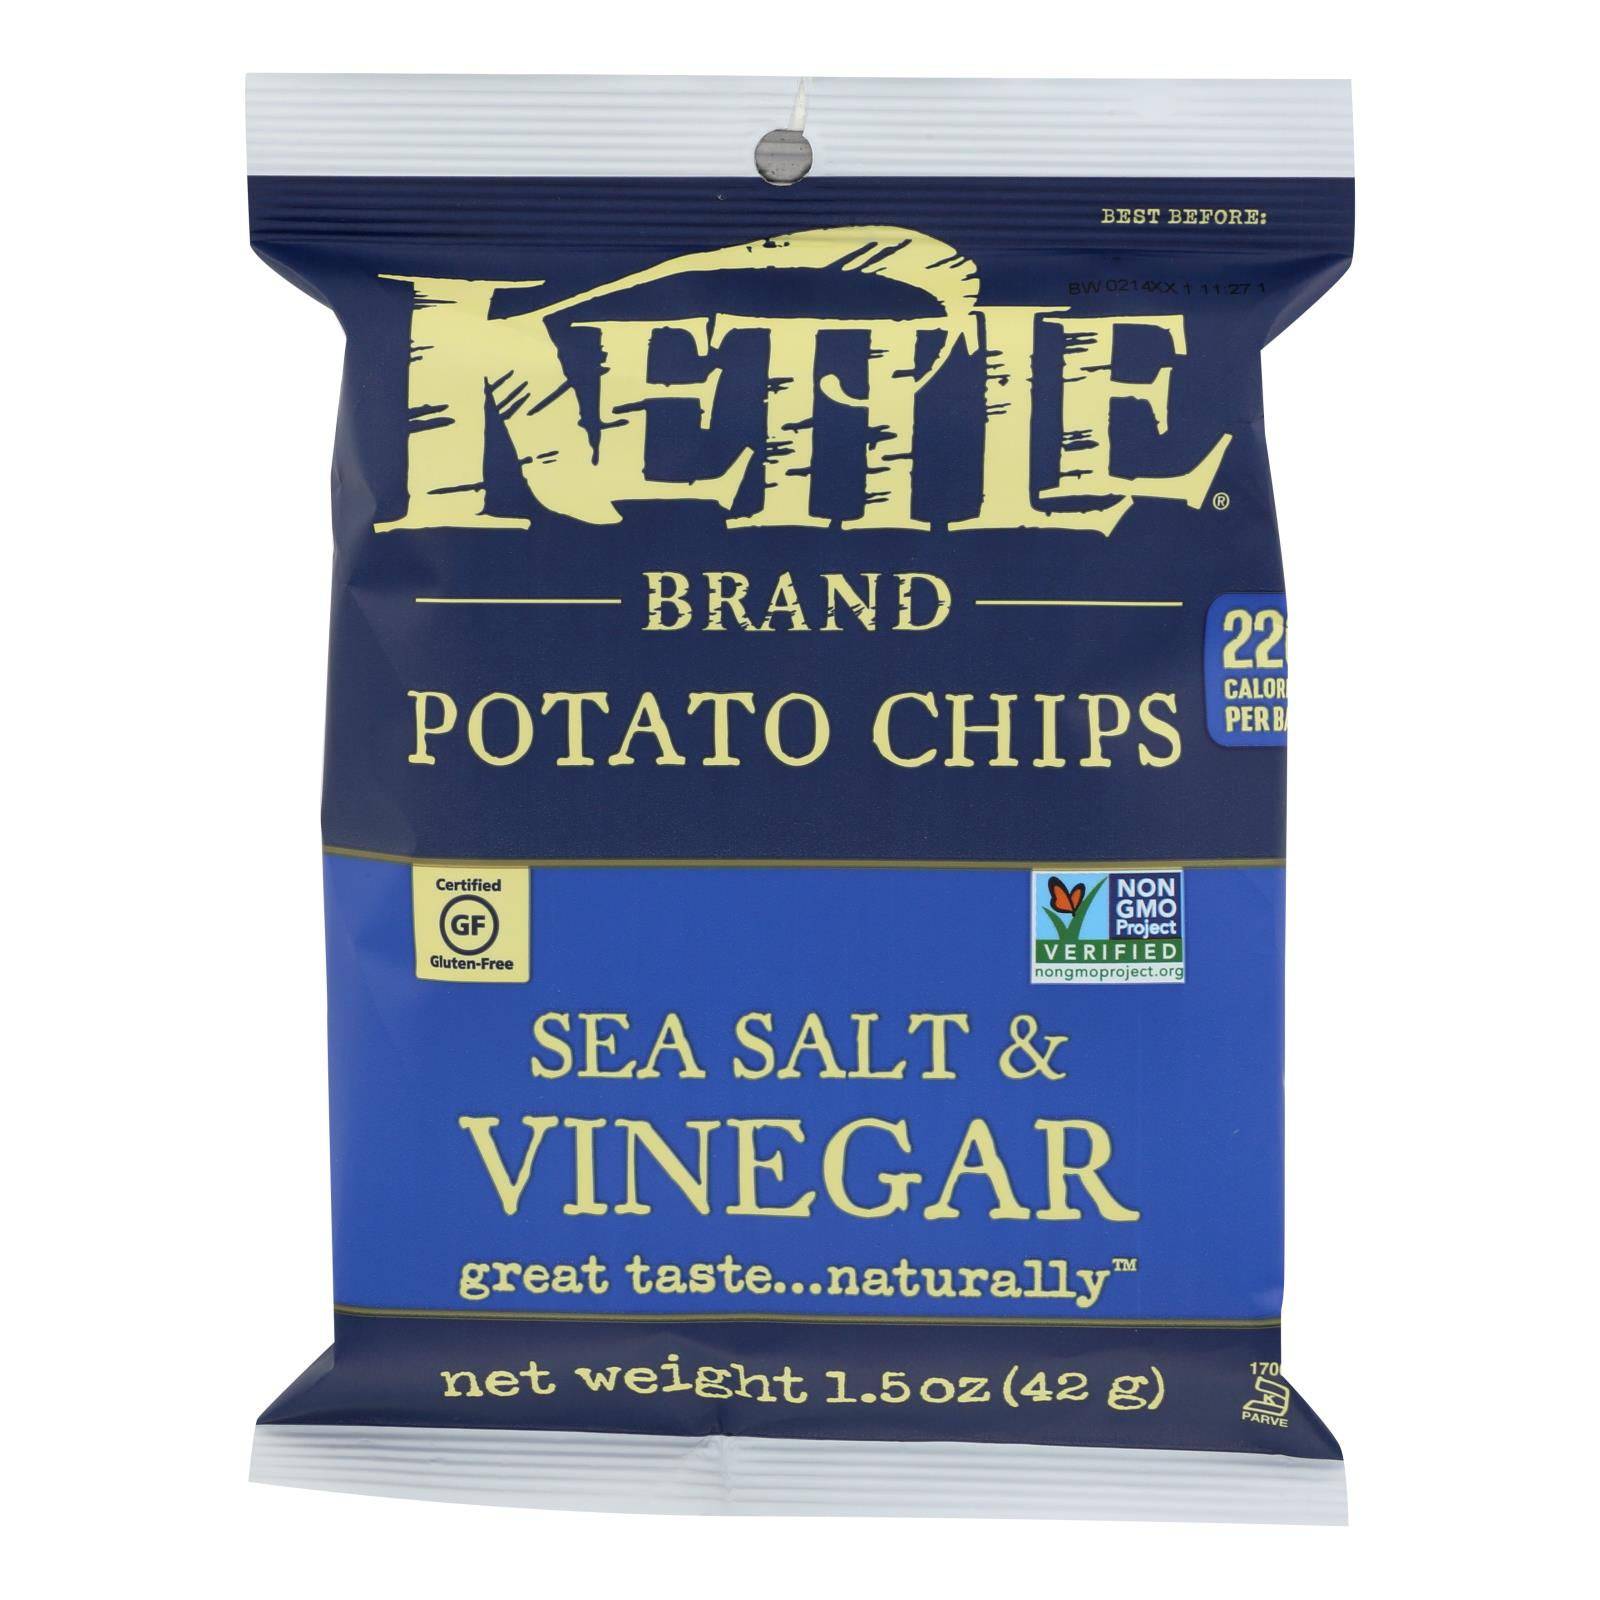 Buy Kettle Brand Potato Chips - Sea Salt And Vinegar - 1.5 Oz - Case Of 24  at OnlyNaturals.us